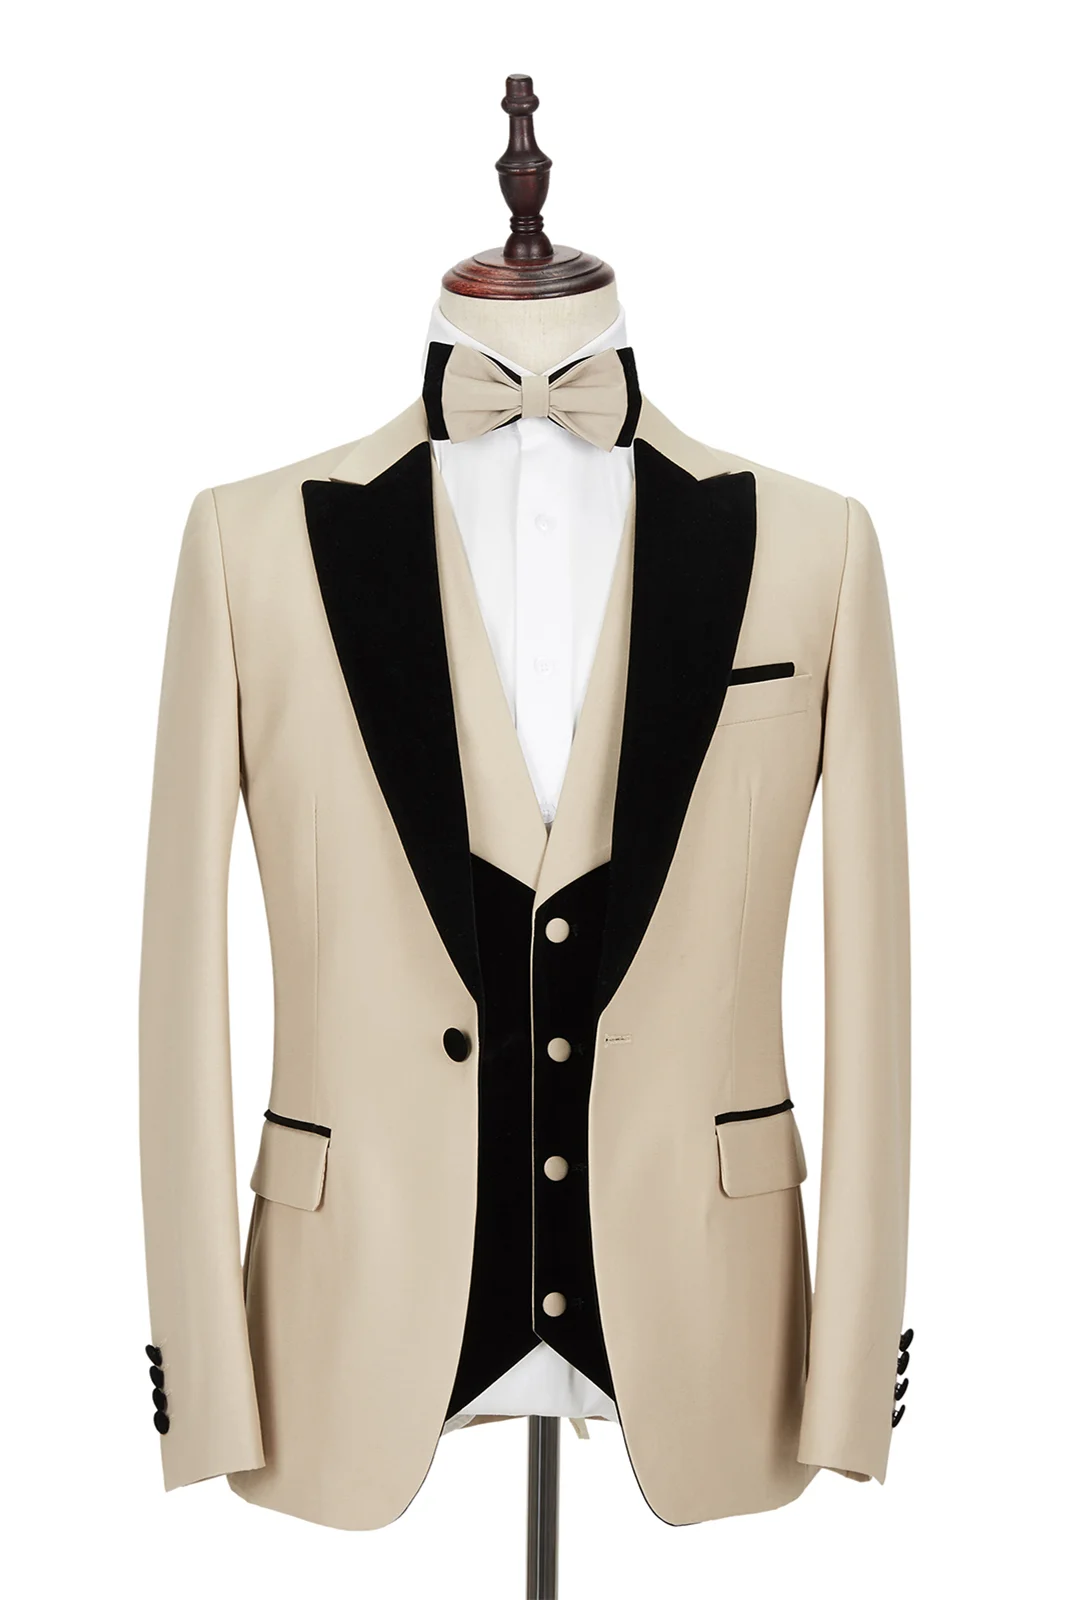 Black Peak Lapel Champagne Wedding Suit Velvet Banding Edge Formal Suit For Men's Party